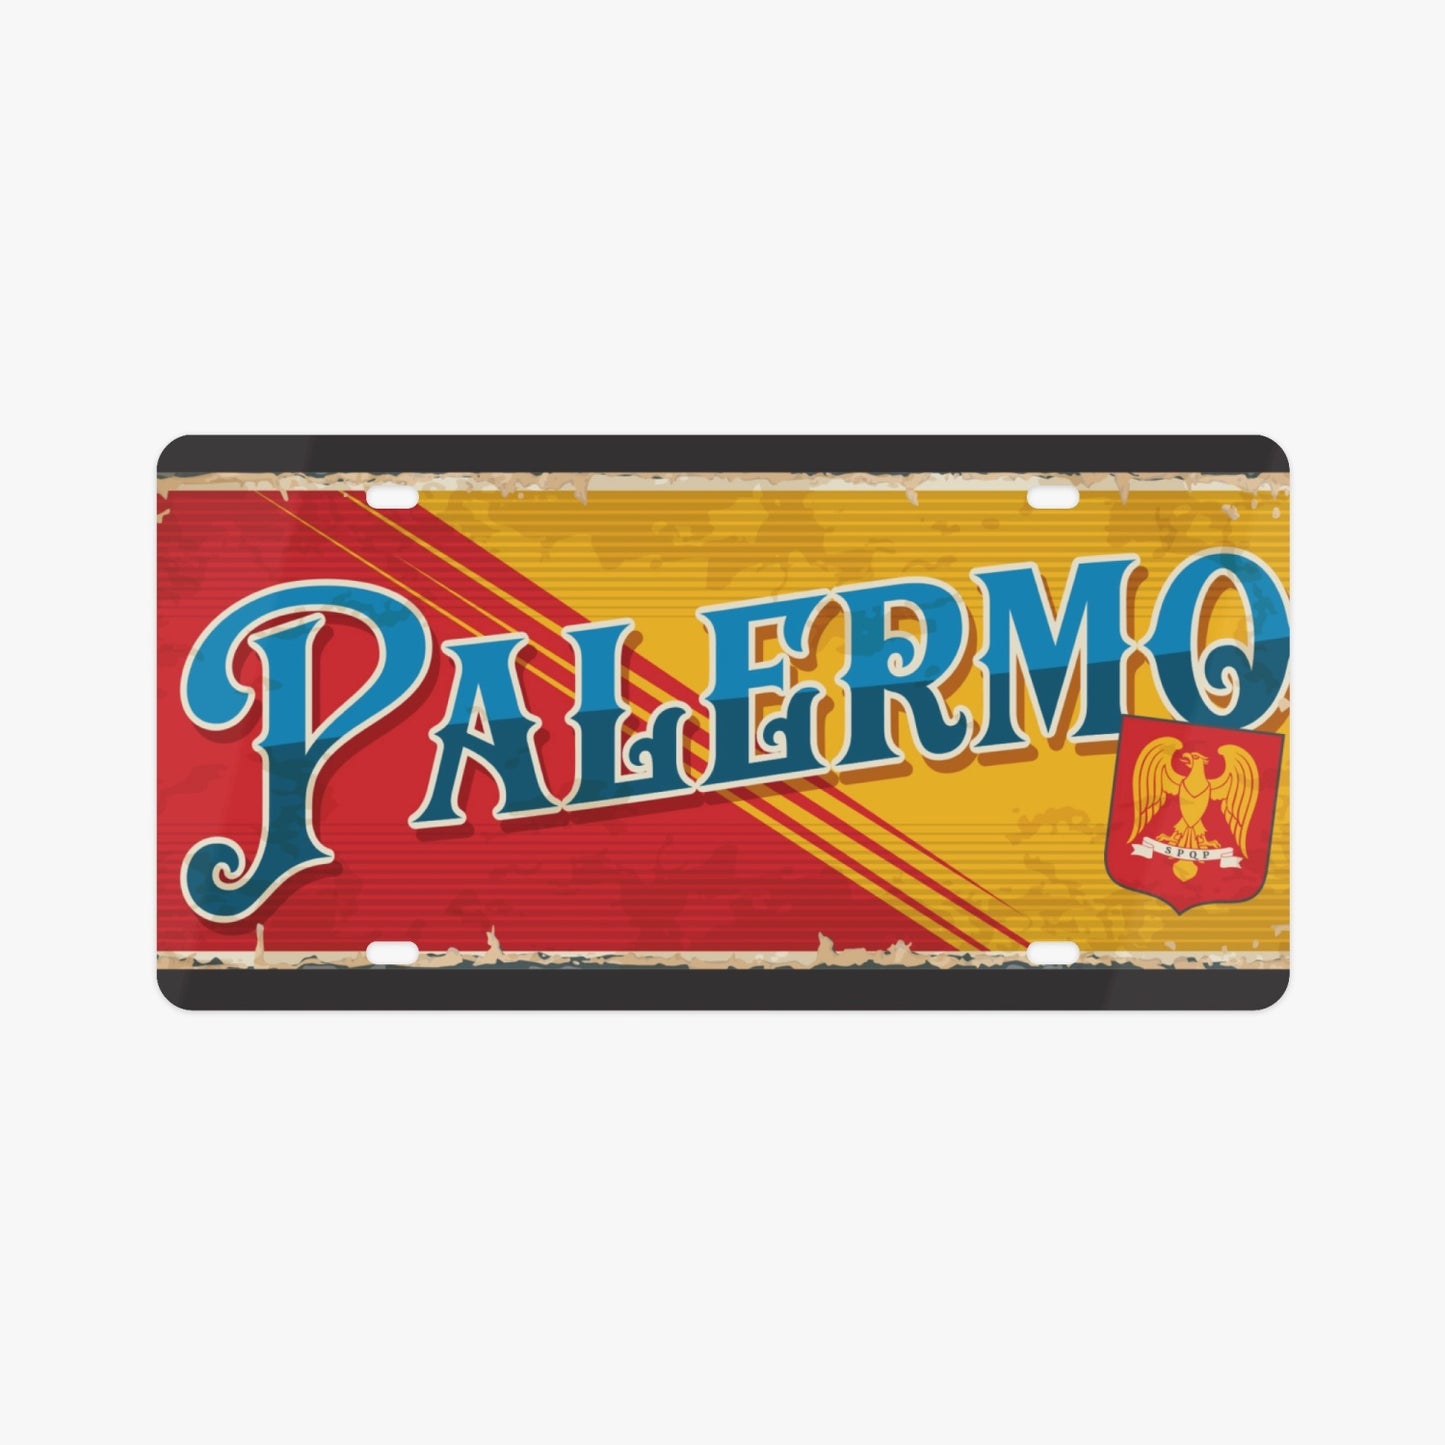 Palermo License Plate Italian Style